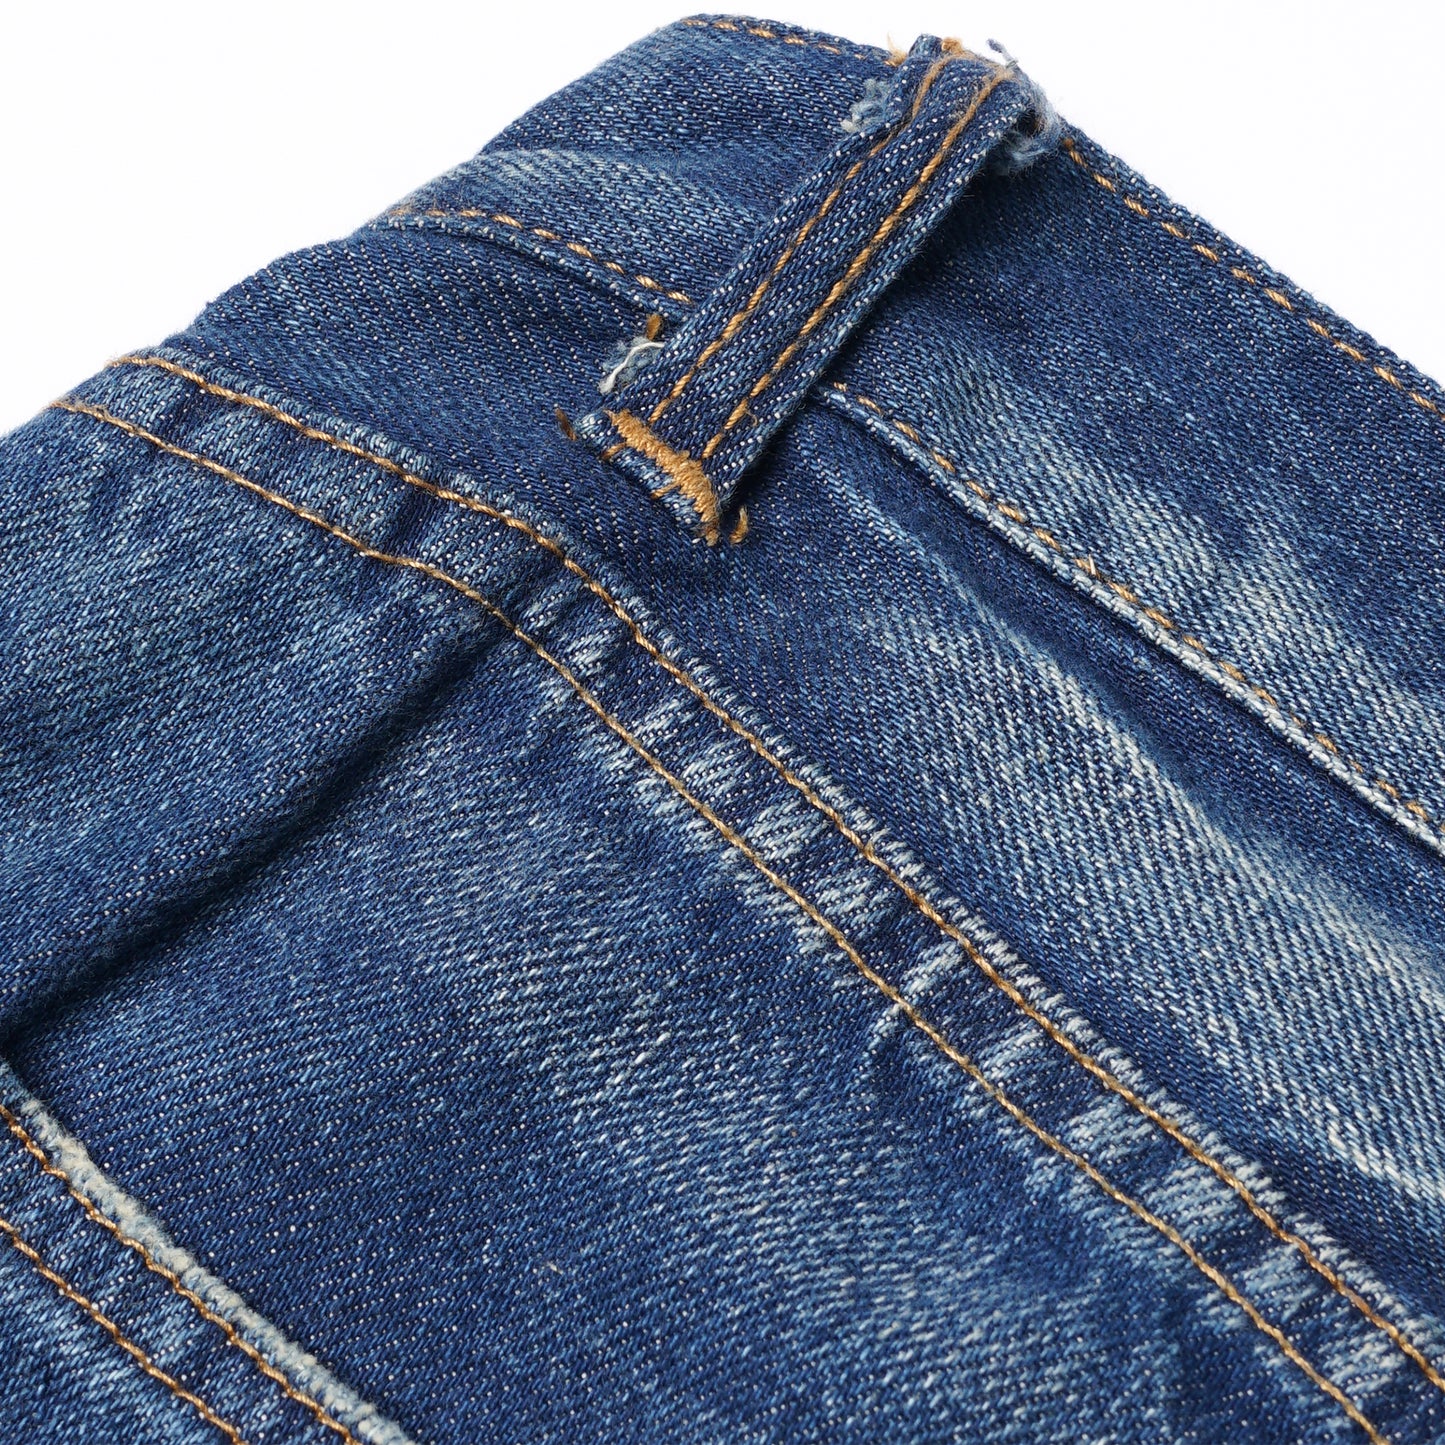 【Custom】No.1 13oz. Dirty Washed Damaged Jeans